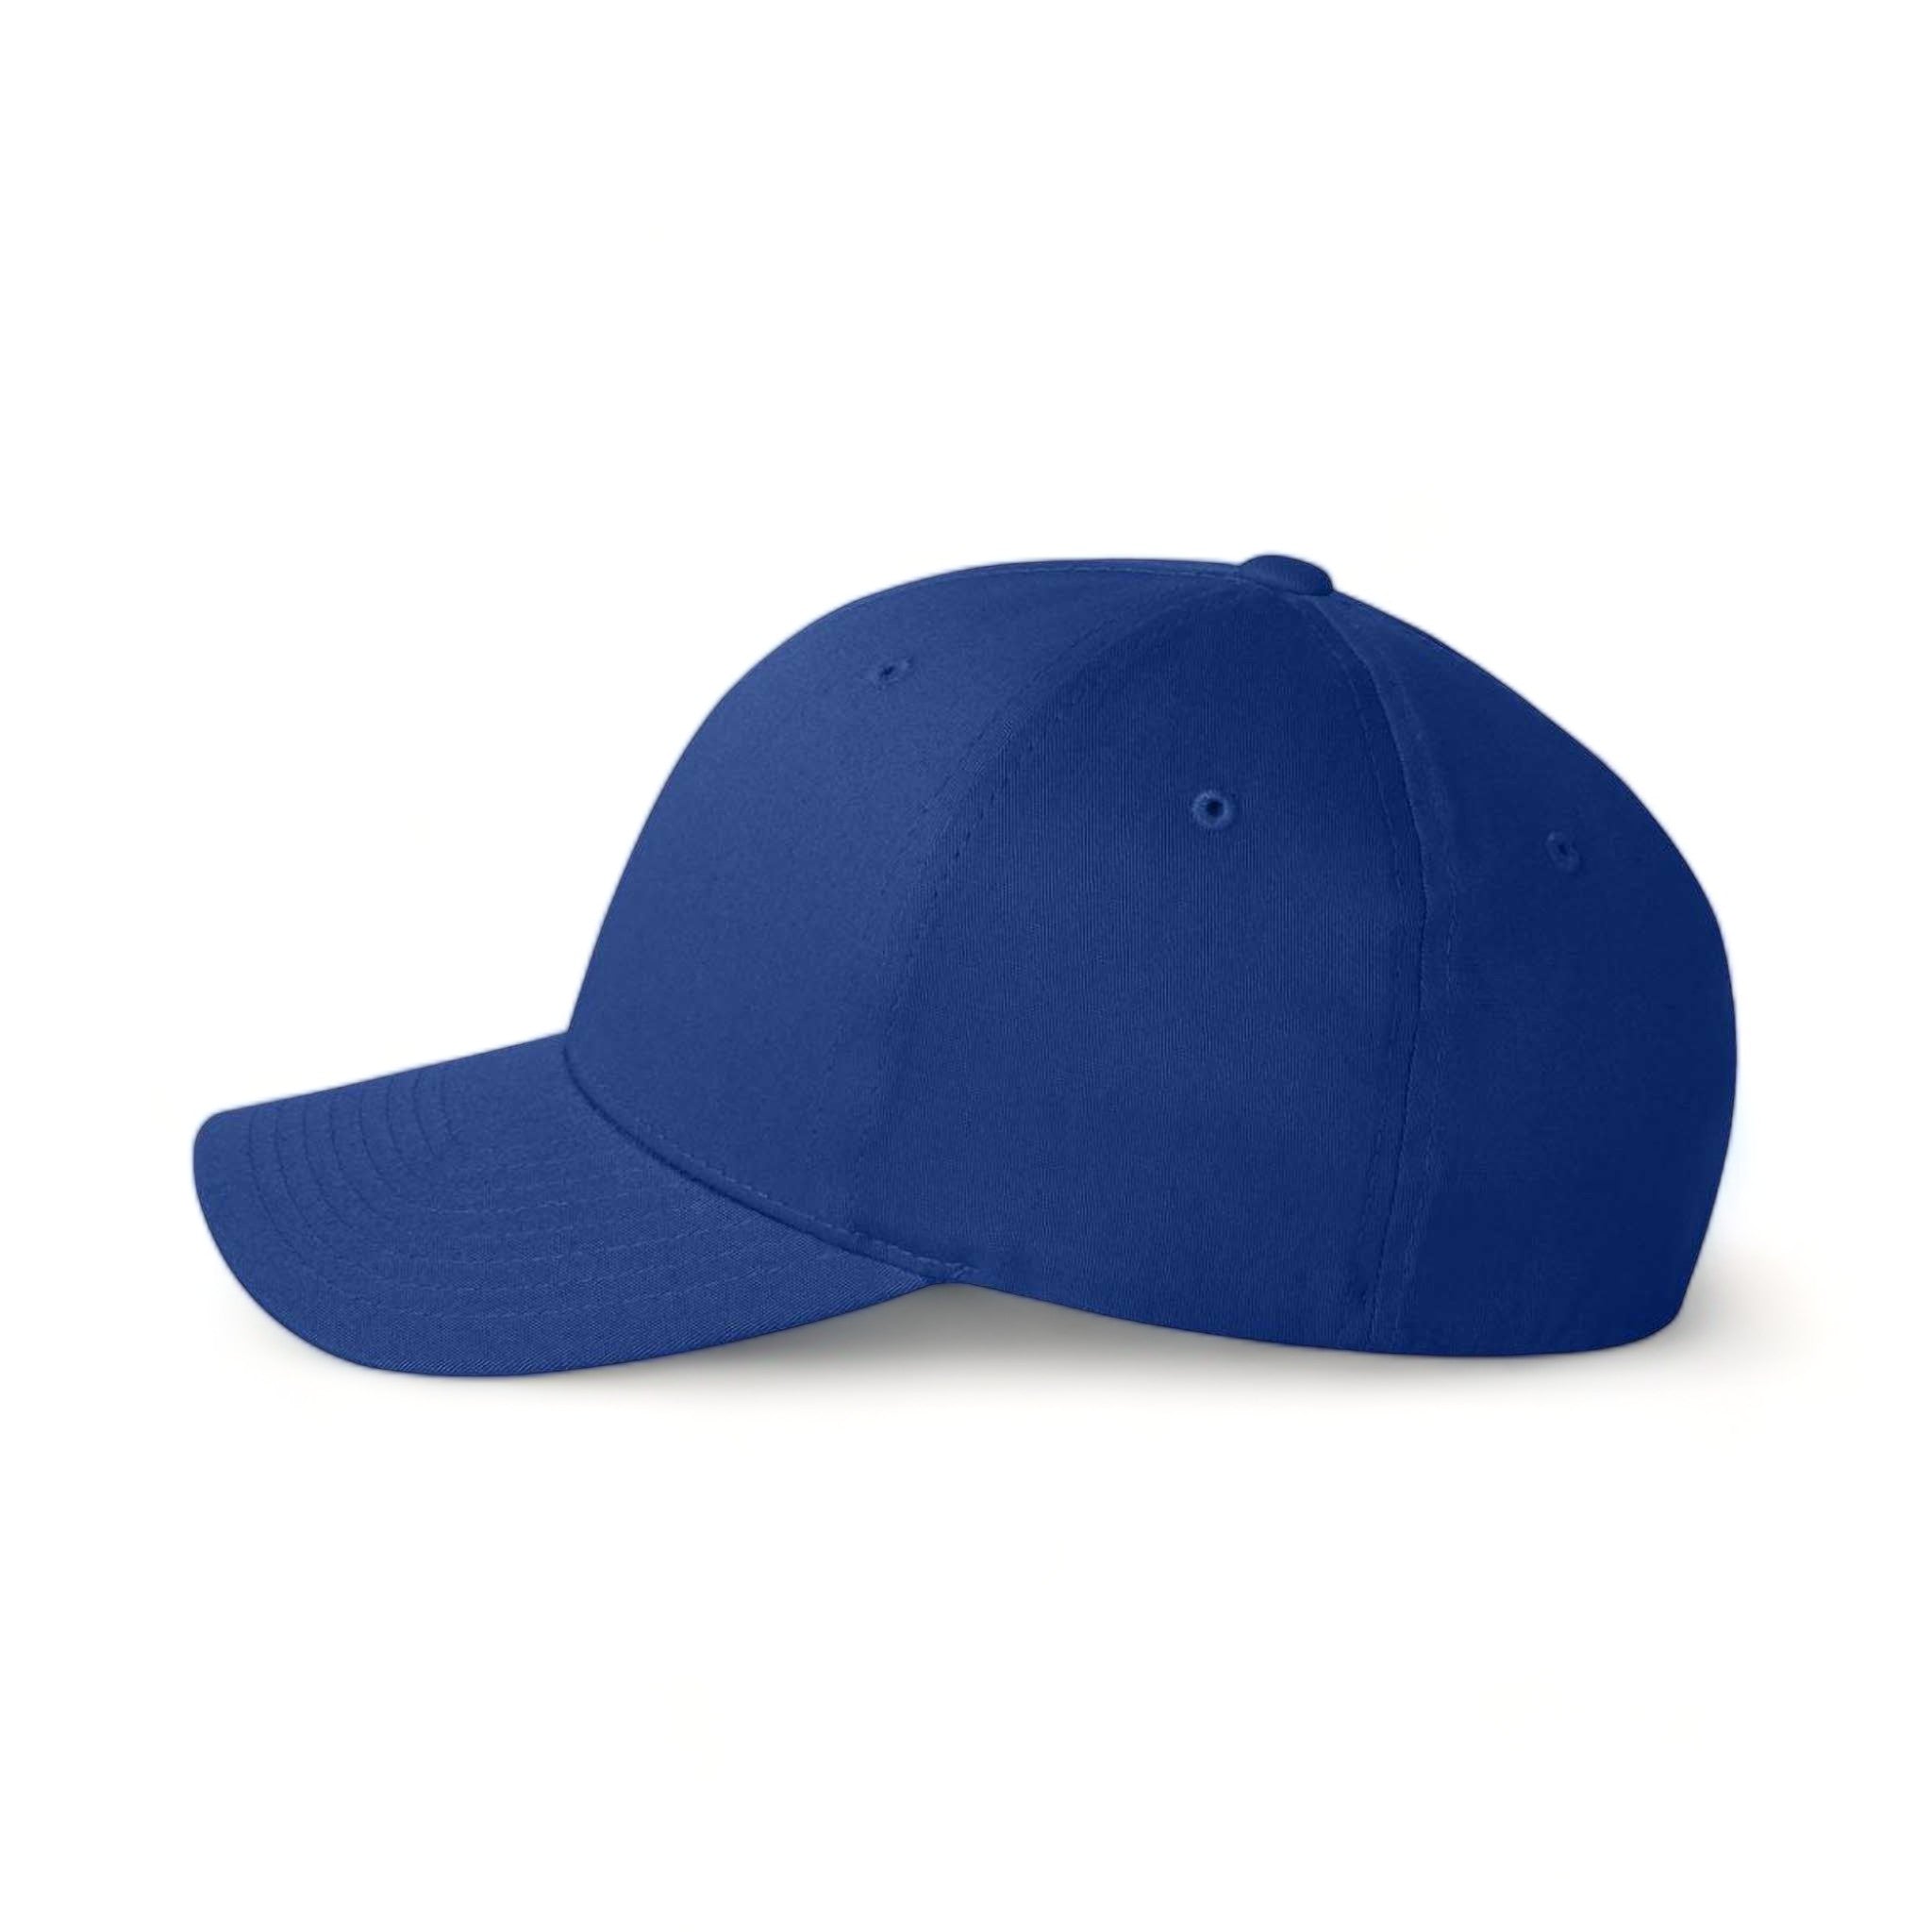 Side view of Flexfit 5001 custom hat in royal blue